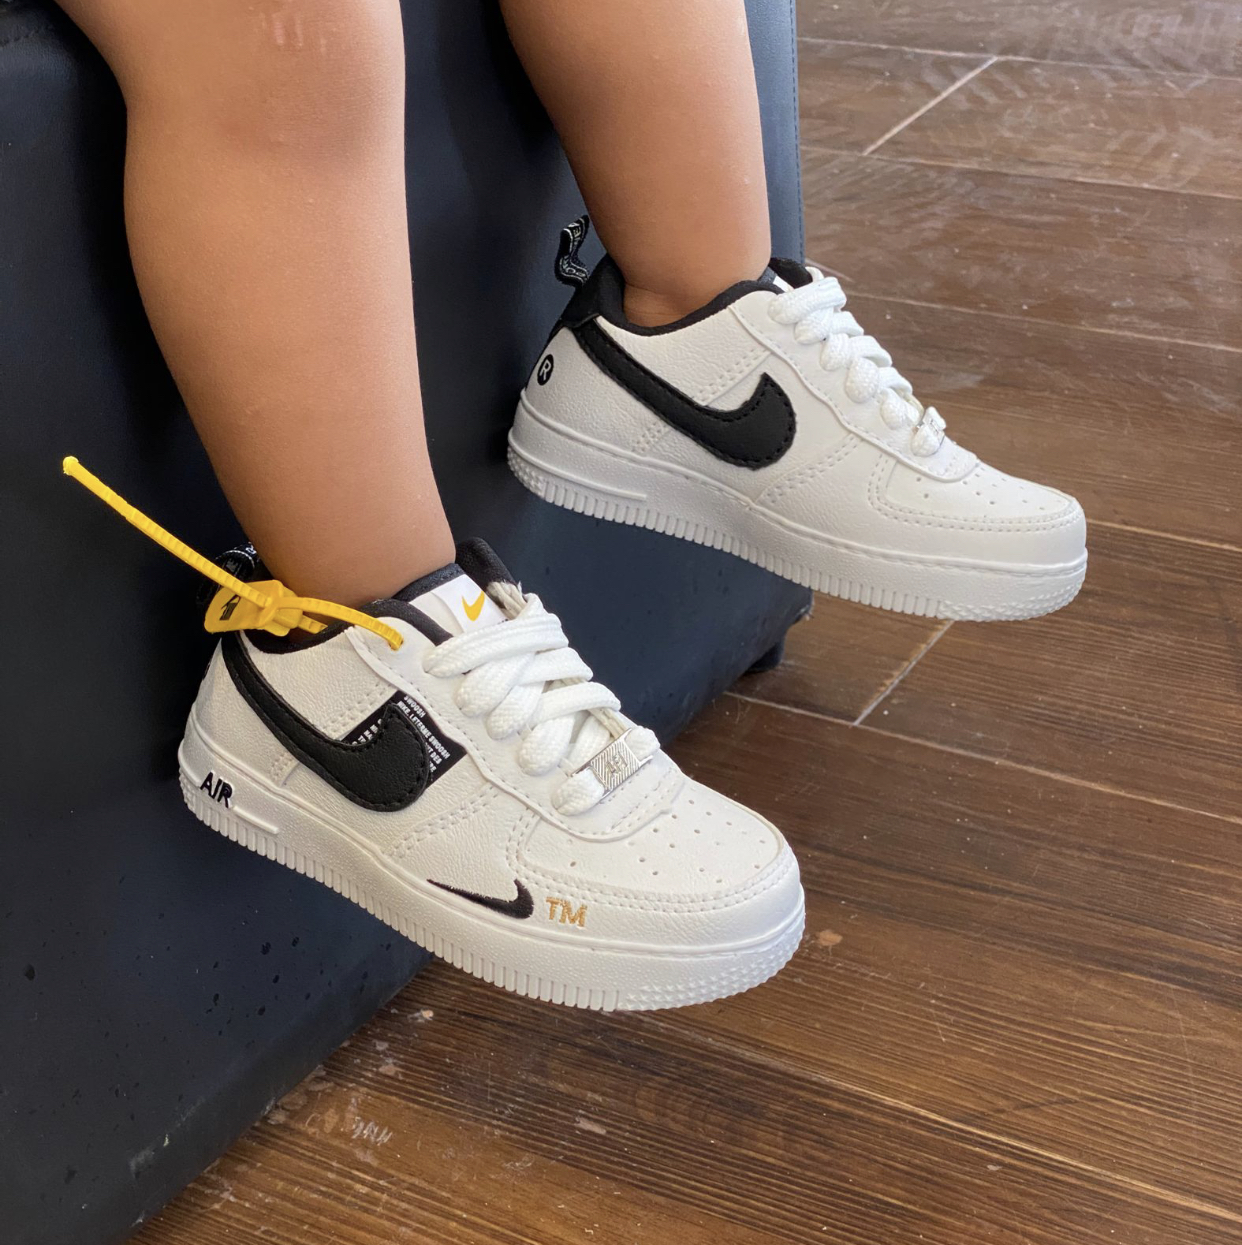 Tênis Infantil Nike TM branco com preto - Miranda Shoes